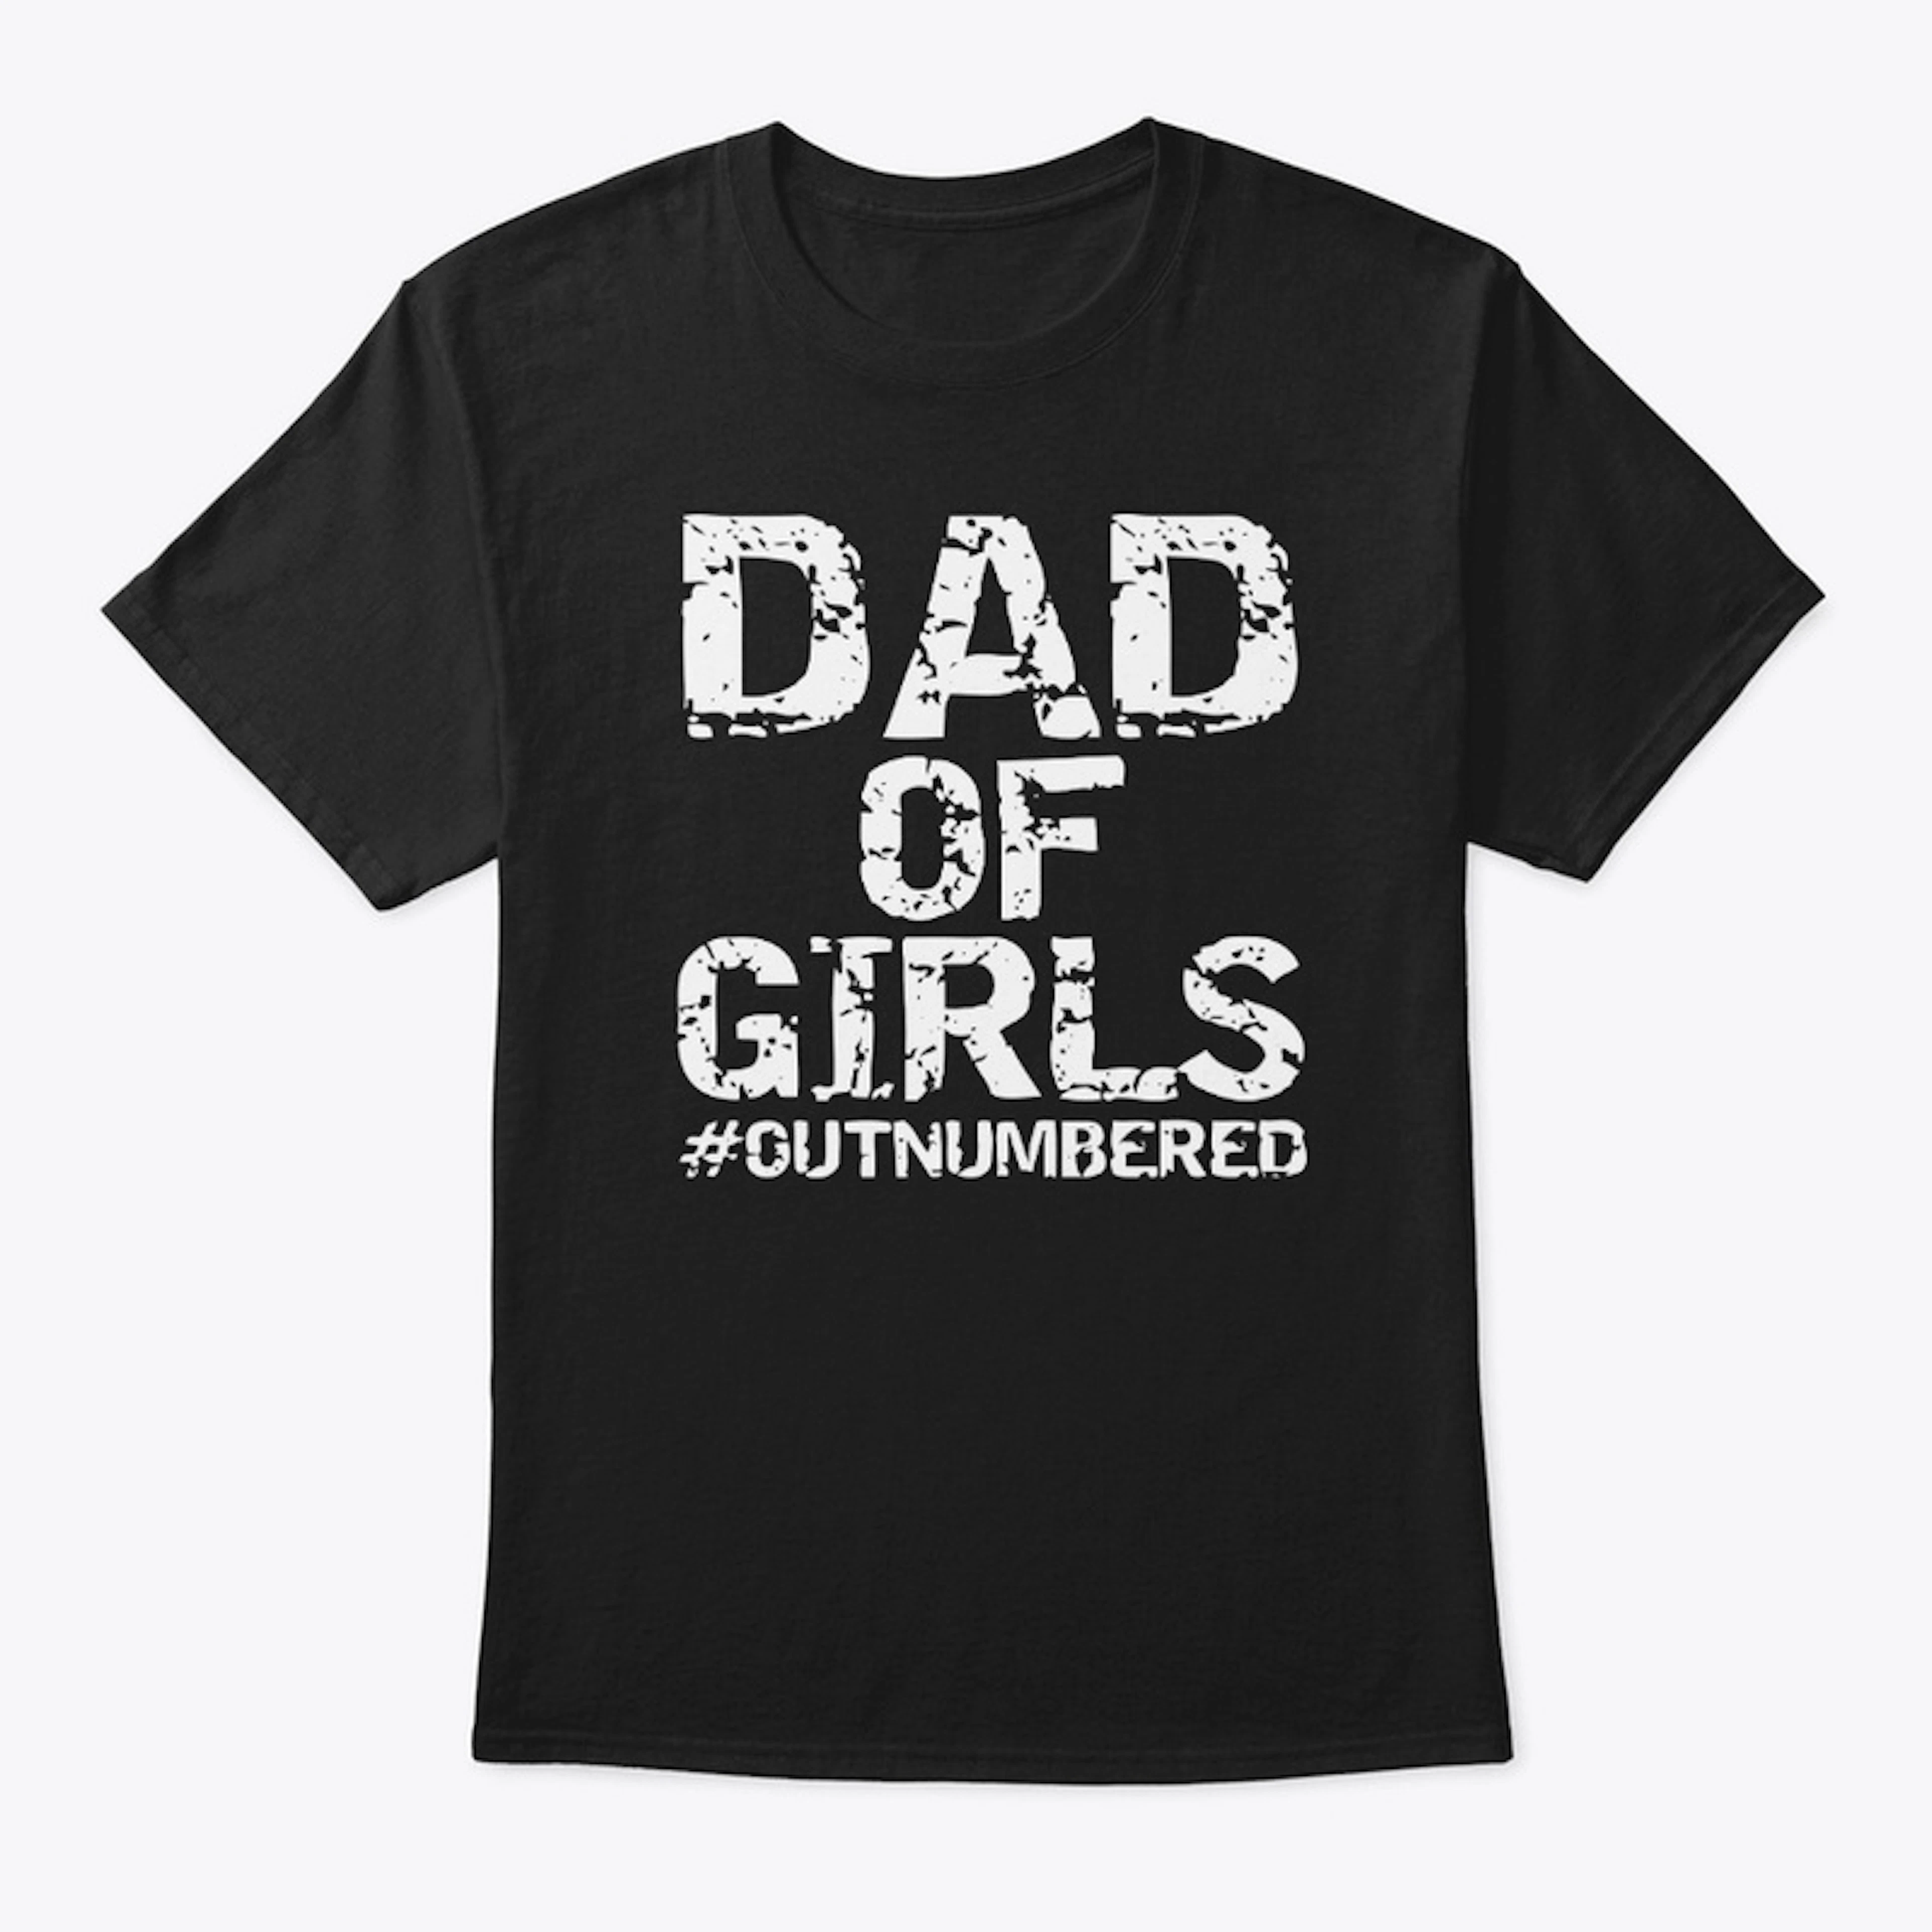 Girl Dad T Shirt